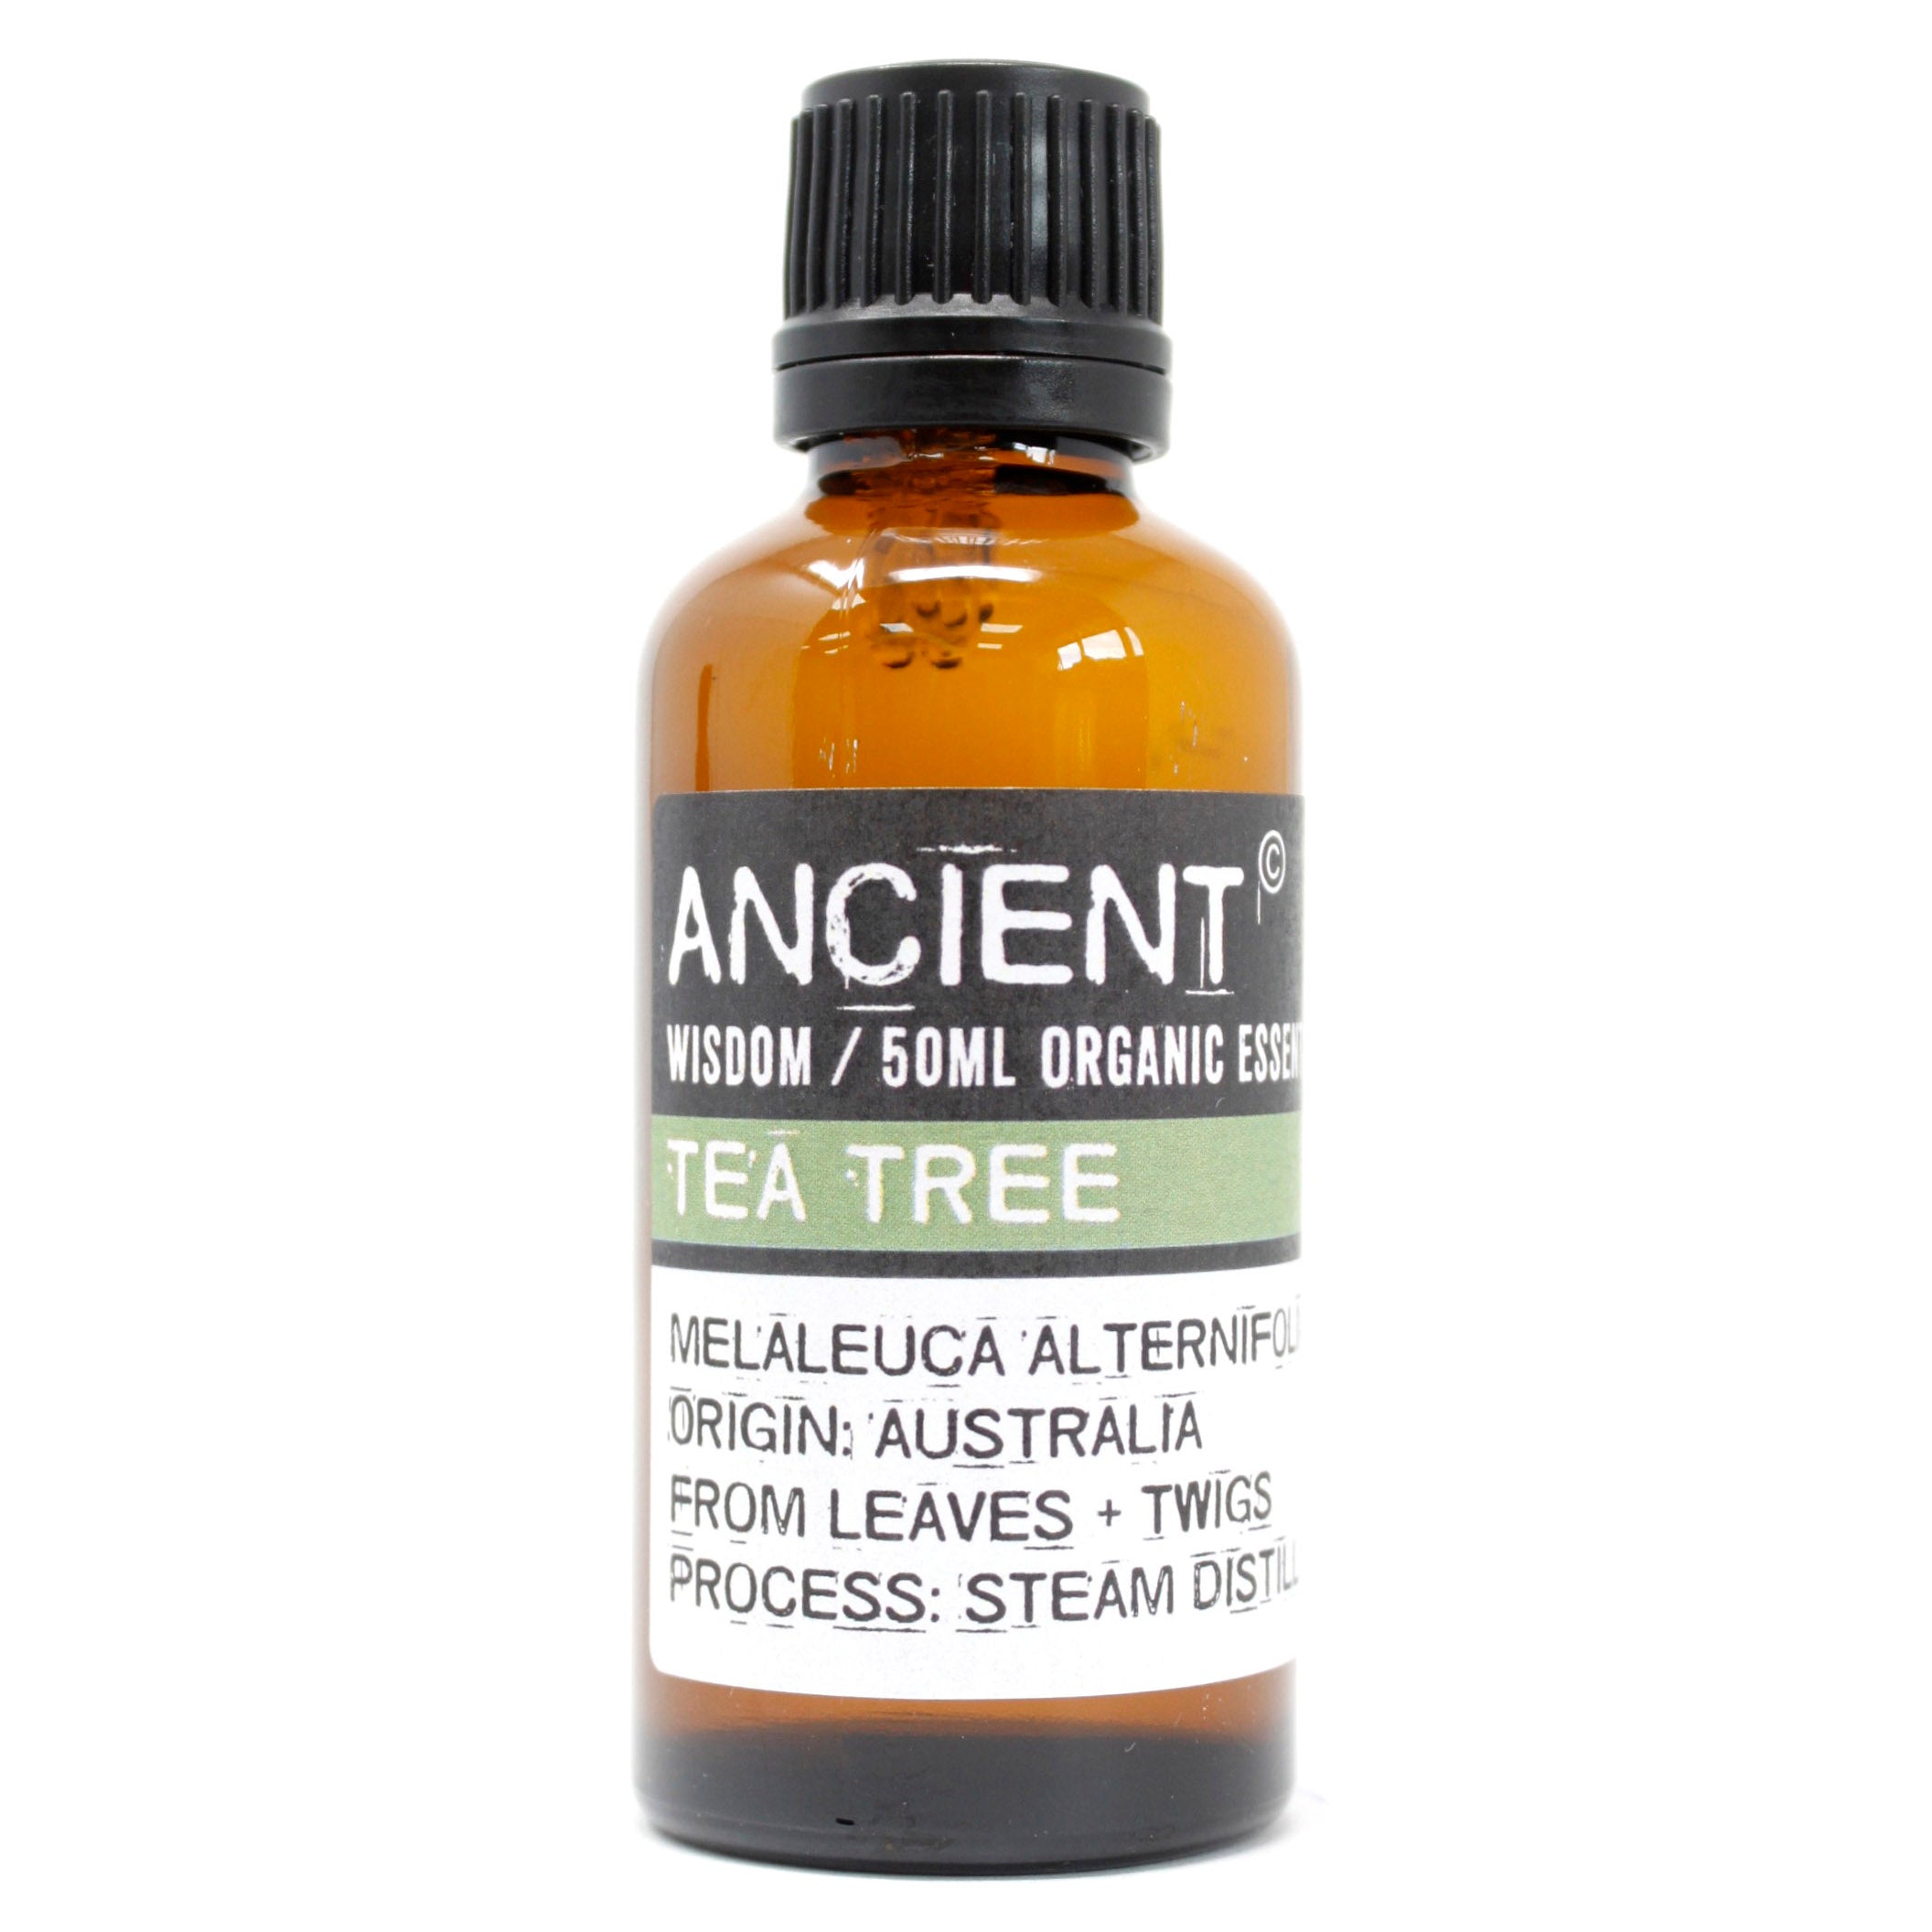 View Tea Tree Organic Essential Oil 50ml information